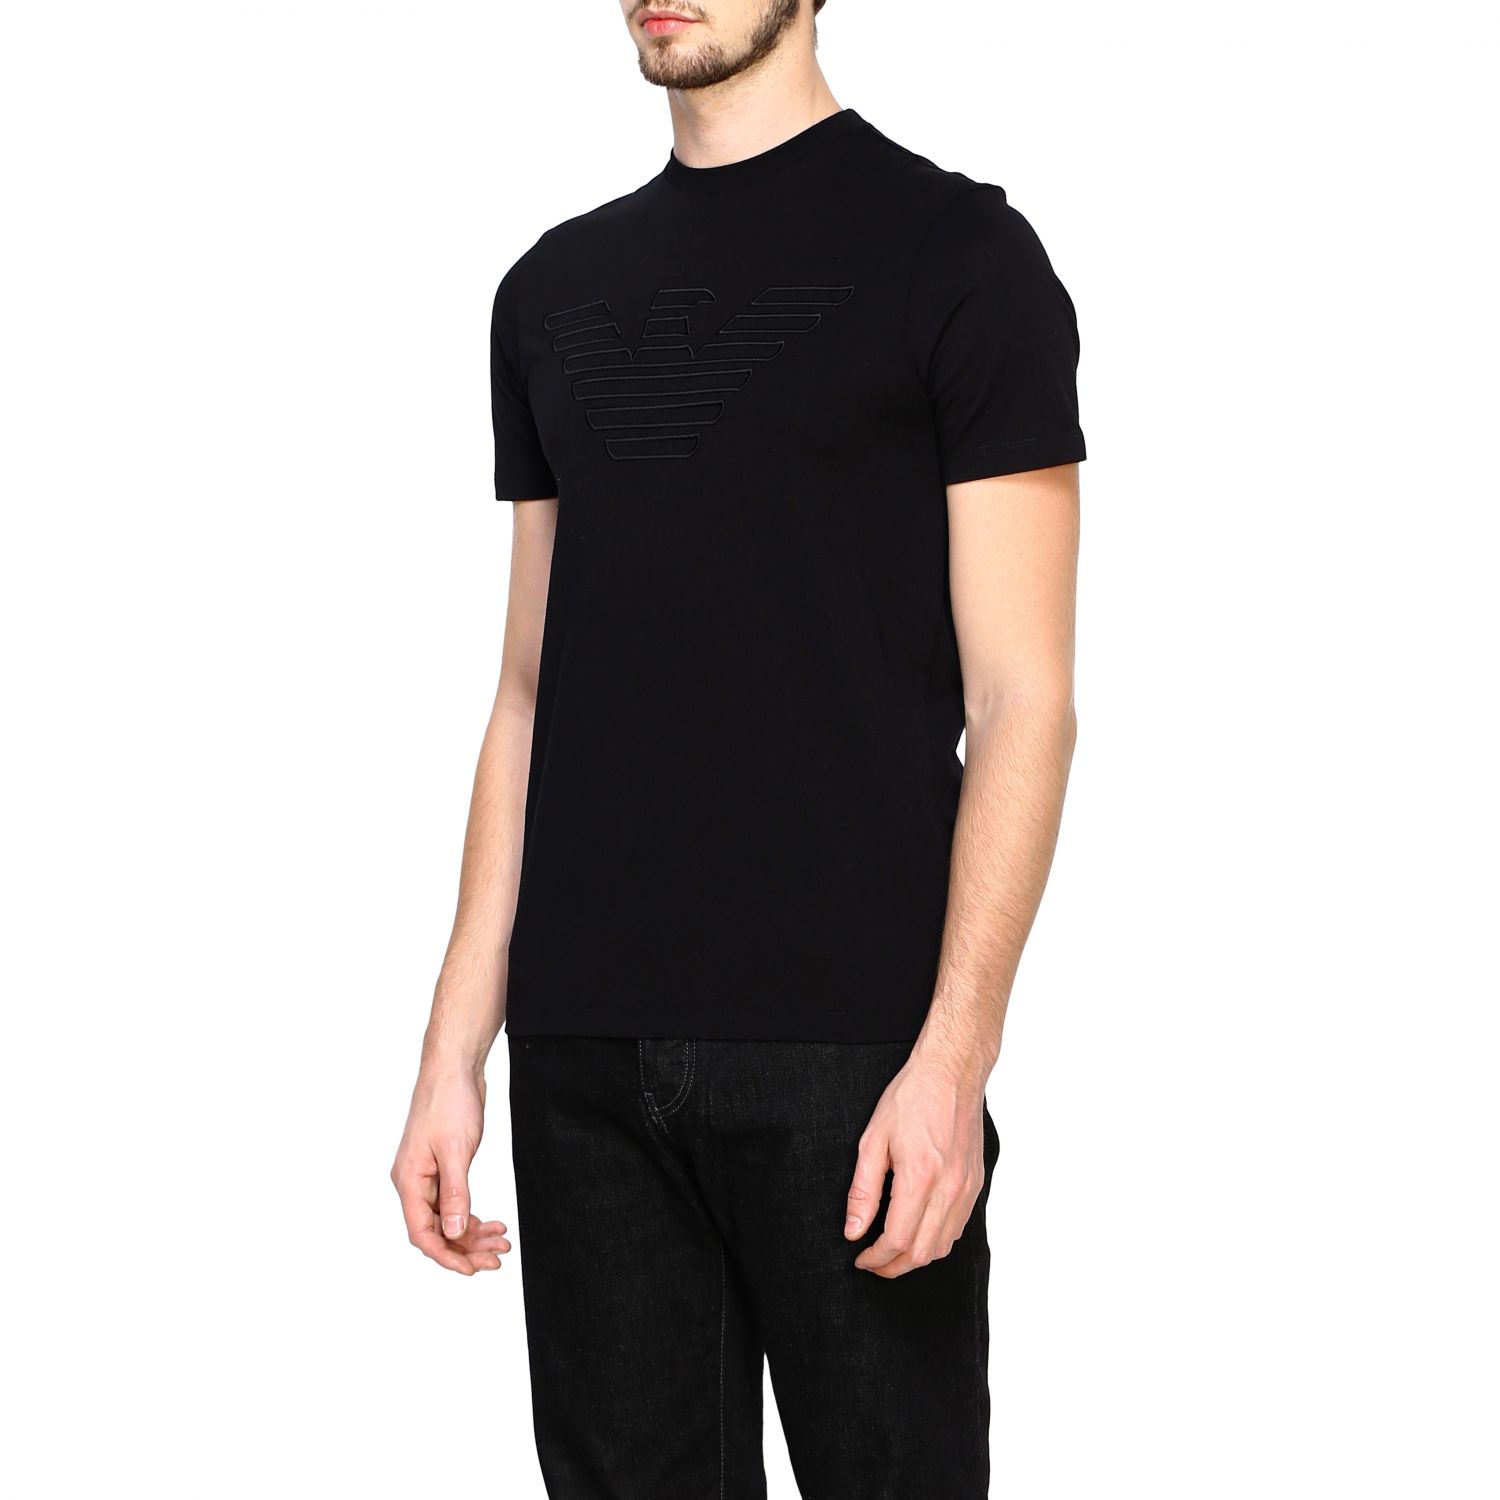 Emporio Armani Outlet: t-shirt for man - Black | Emporio Armani t-shirt ...